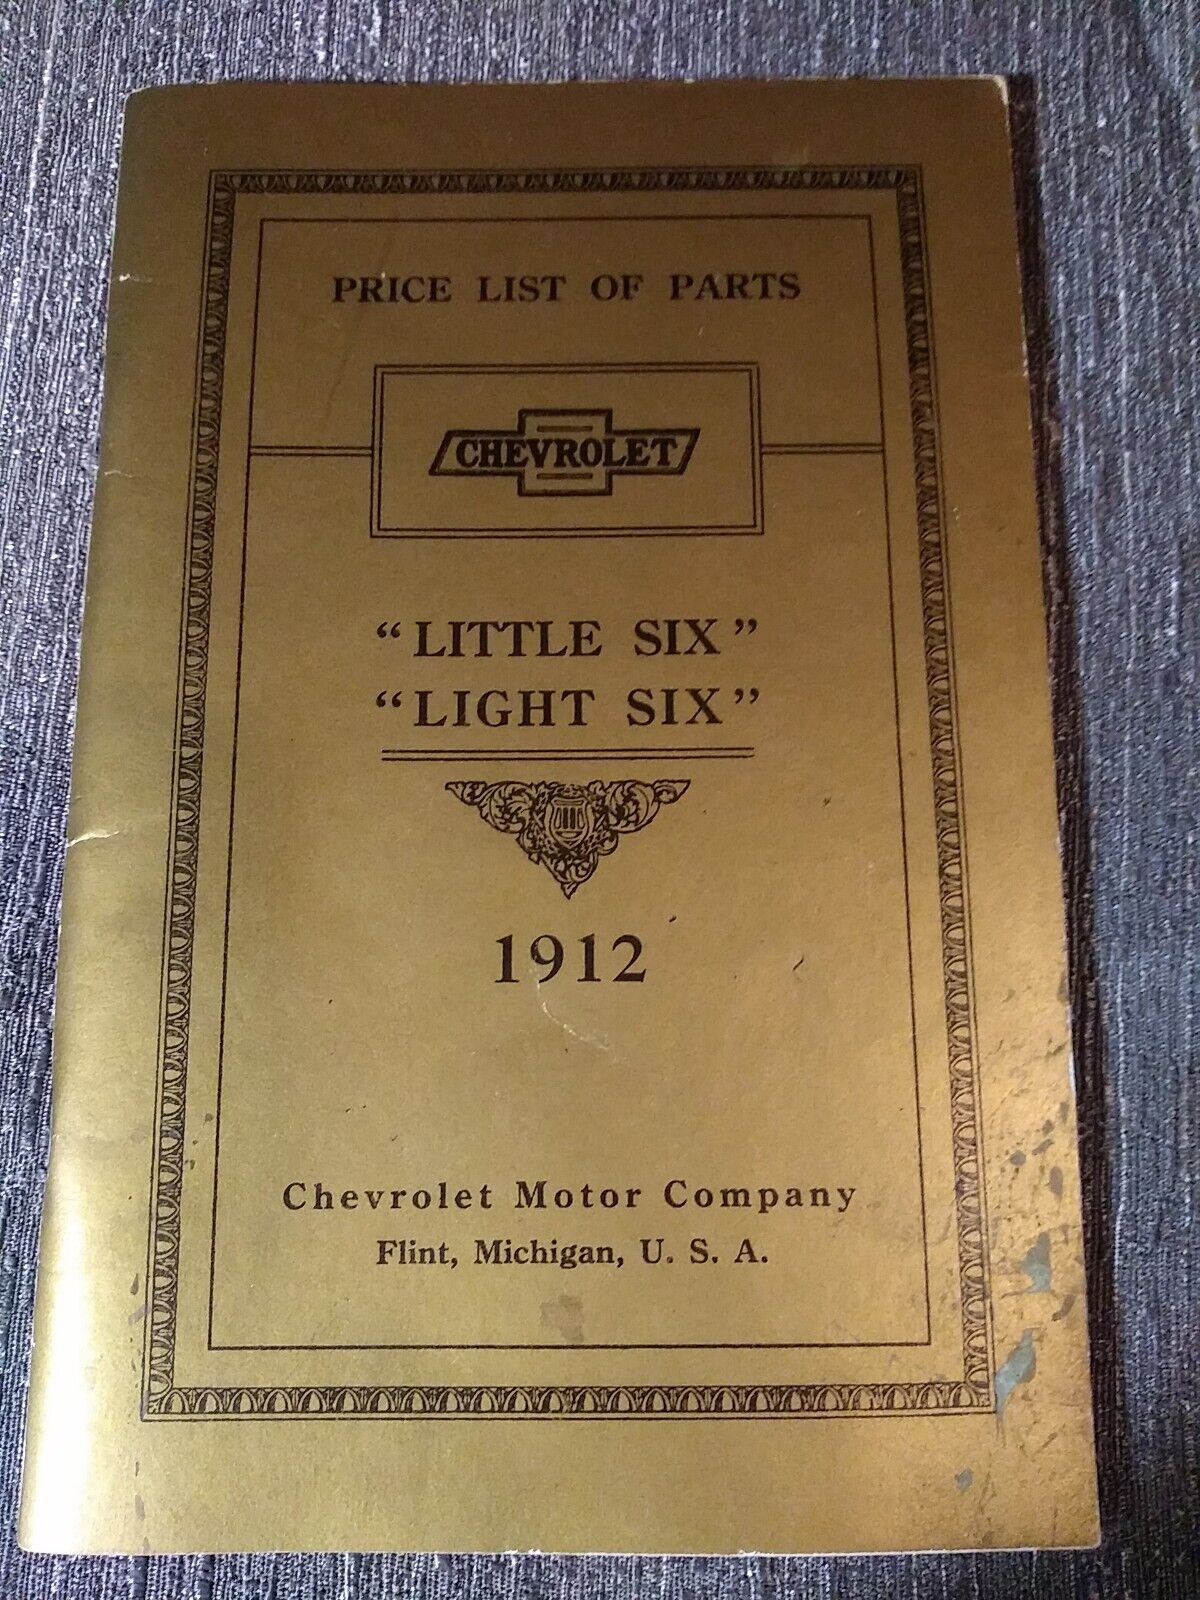 Chevrolet 1912 Little Six Light Six Price List of Parts Vintage